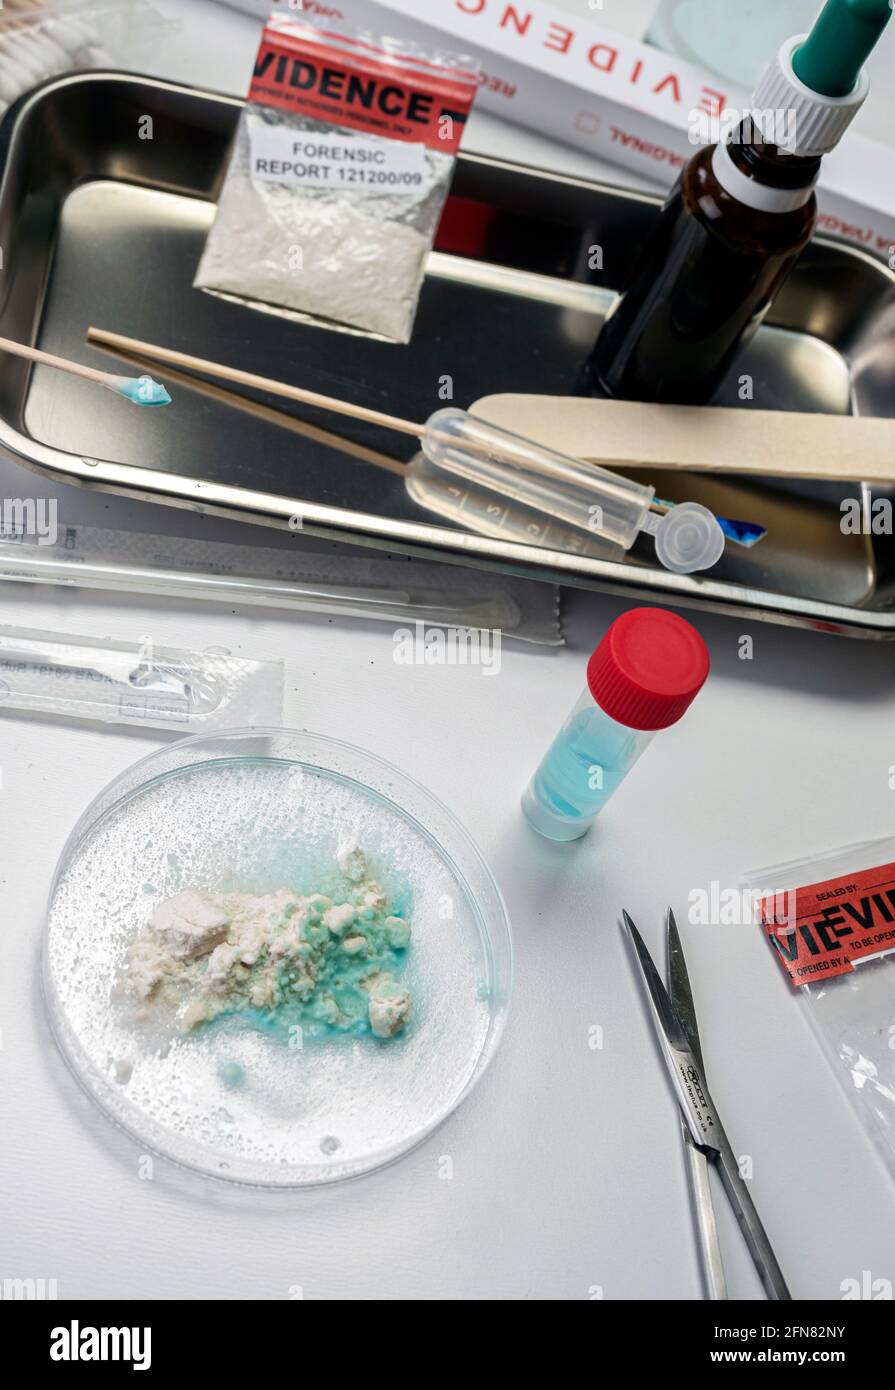 Kriminallabor, toxikologischer Nachweistest auf Kokain-Hydrochlorid, konzeptuelles Bild Stockfoto